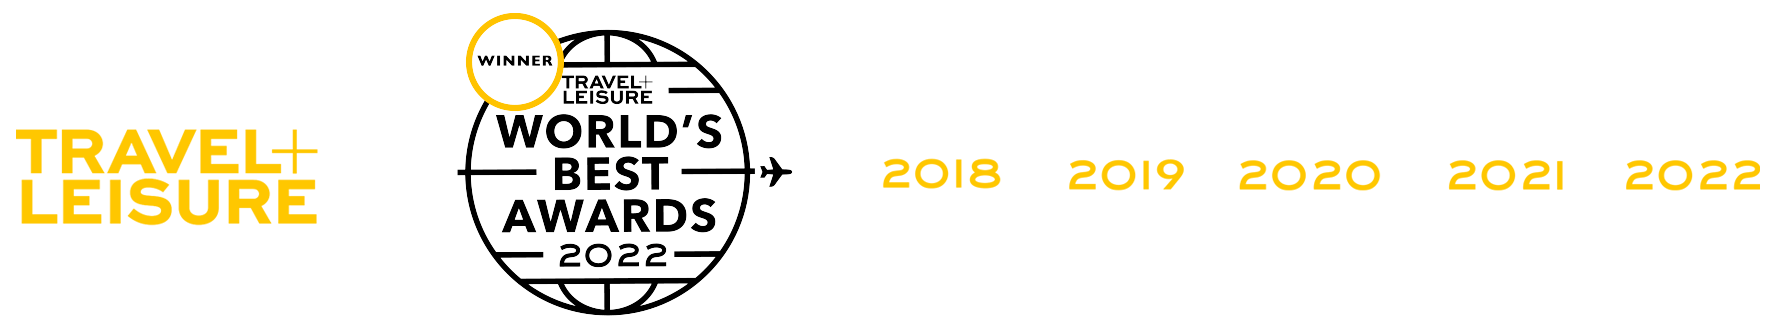 Travel+Leisure World's Best Awards badge showing 2018, 2019, 2020, 2021 & 2022